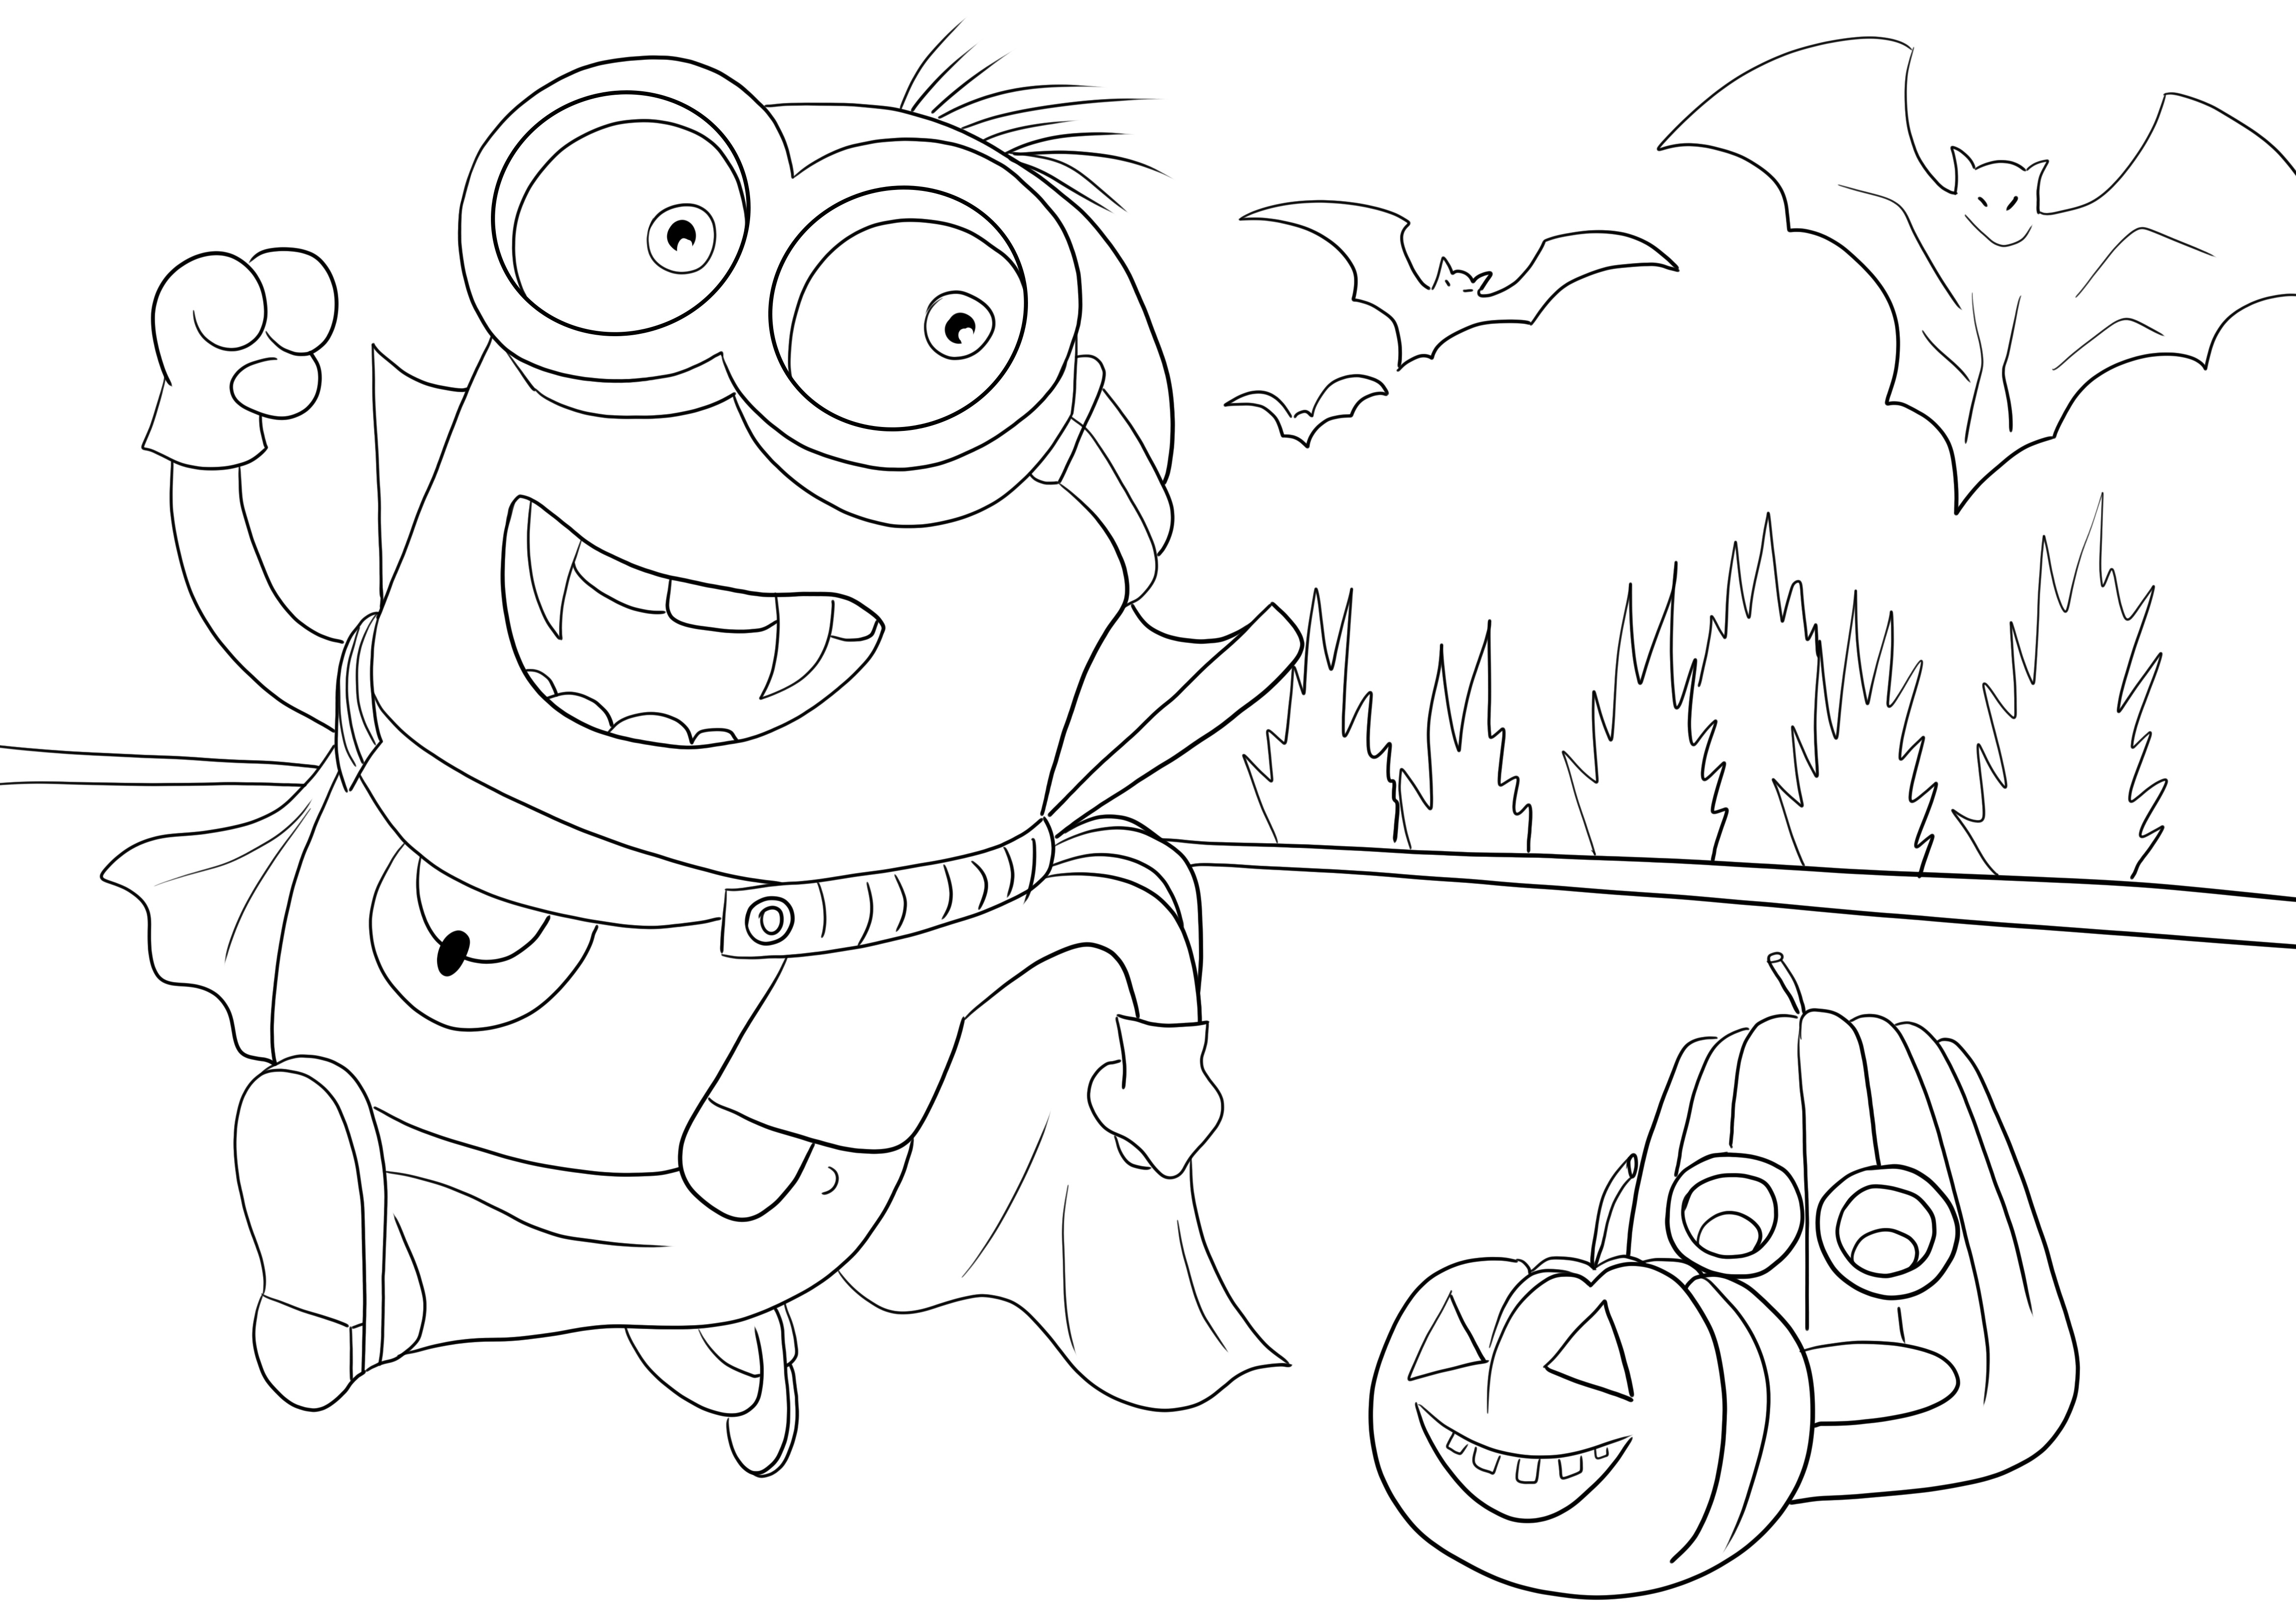 Desenhos de Halloween para colorir: + de 50 atividades de Dia das Bruxas   Minions coloring pages, Minion coloring pages, Halloween coloring sheets